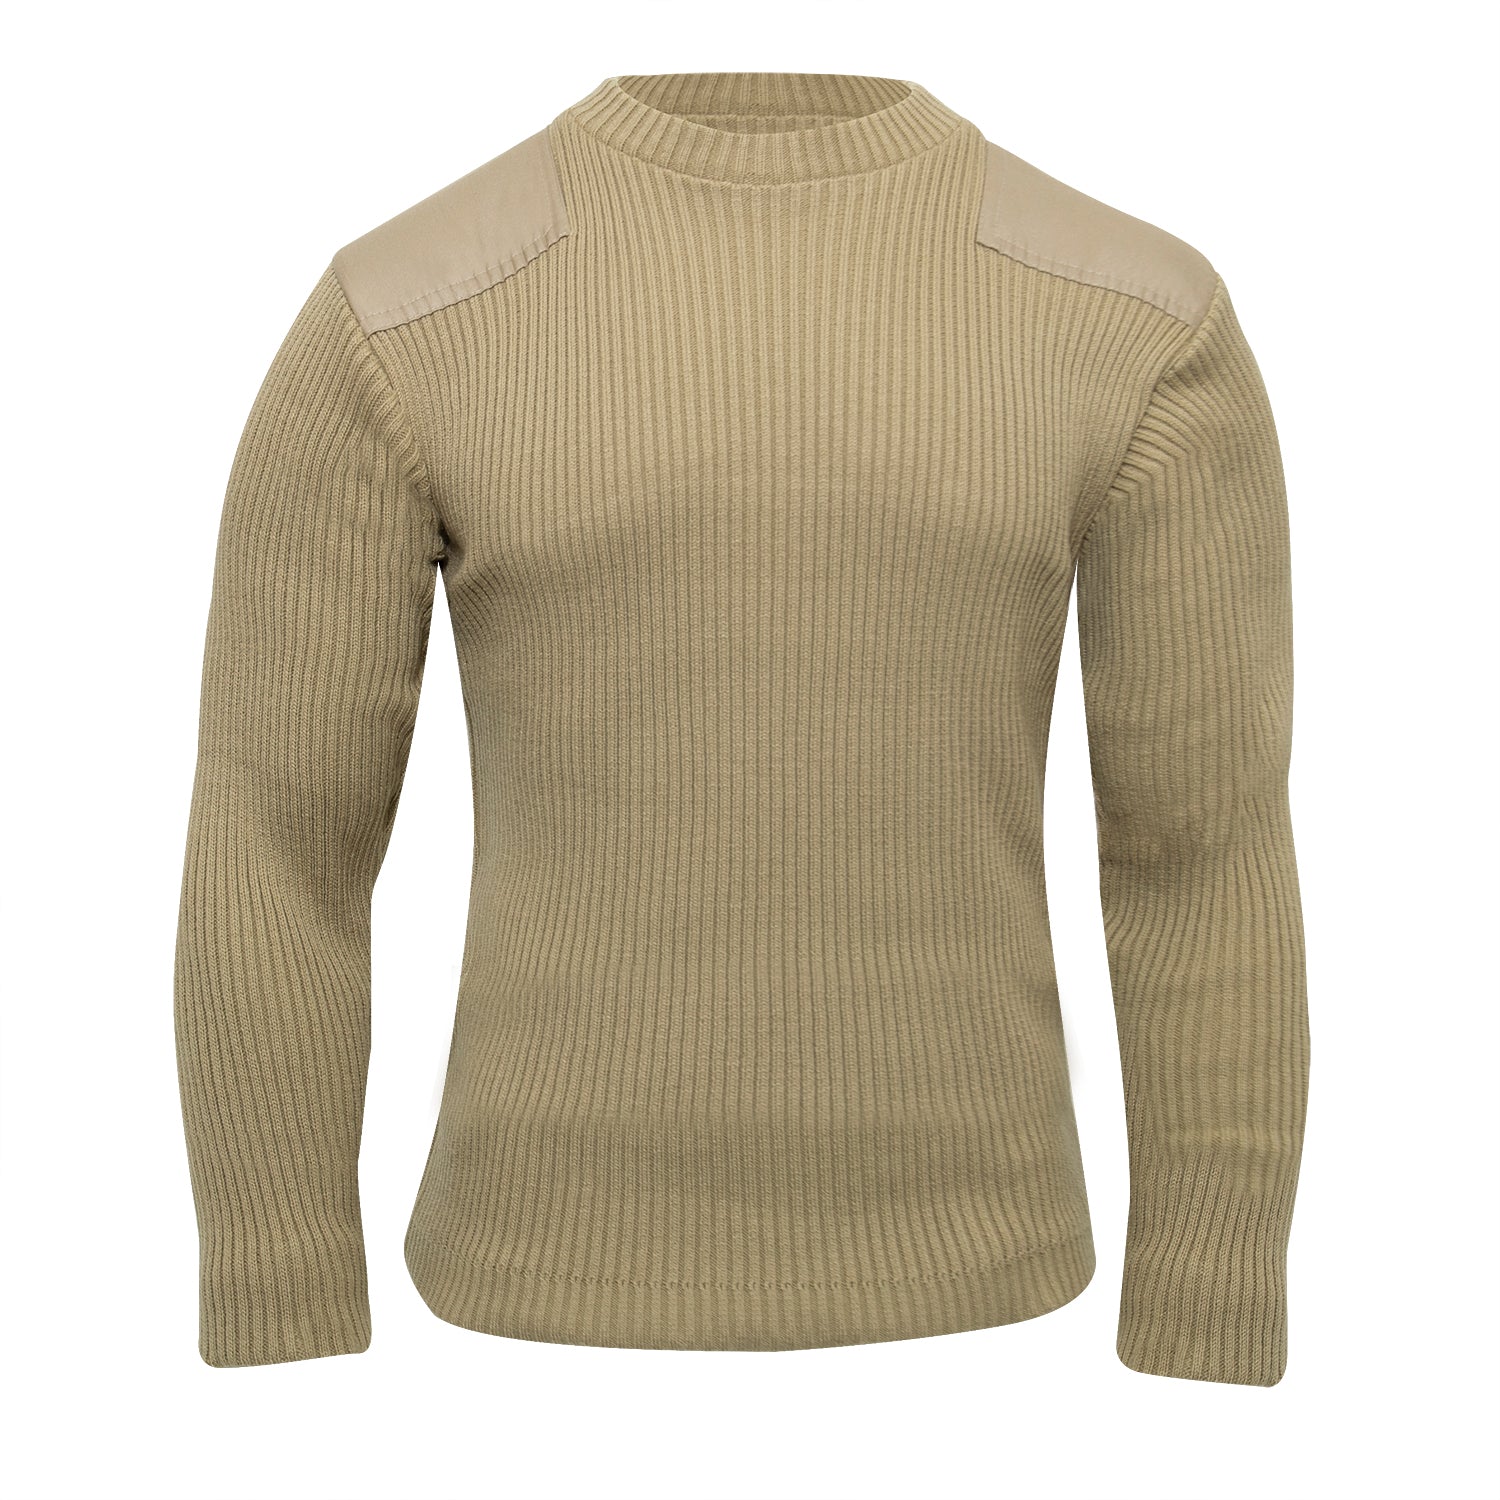 Milspec G.I. Style Acrylic Commando Sweater Big & Tall Shirts MilTac Tactical Military Outdoor Gear Australia